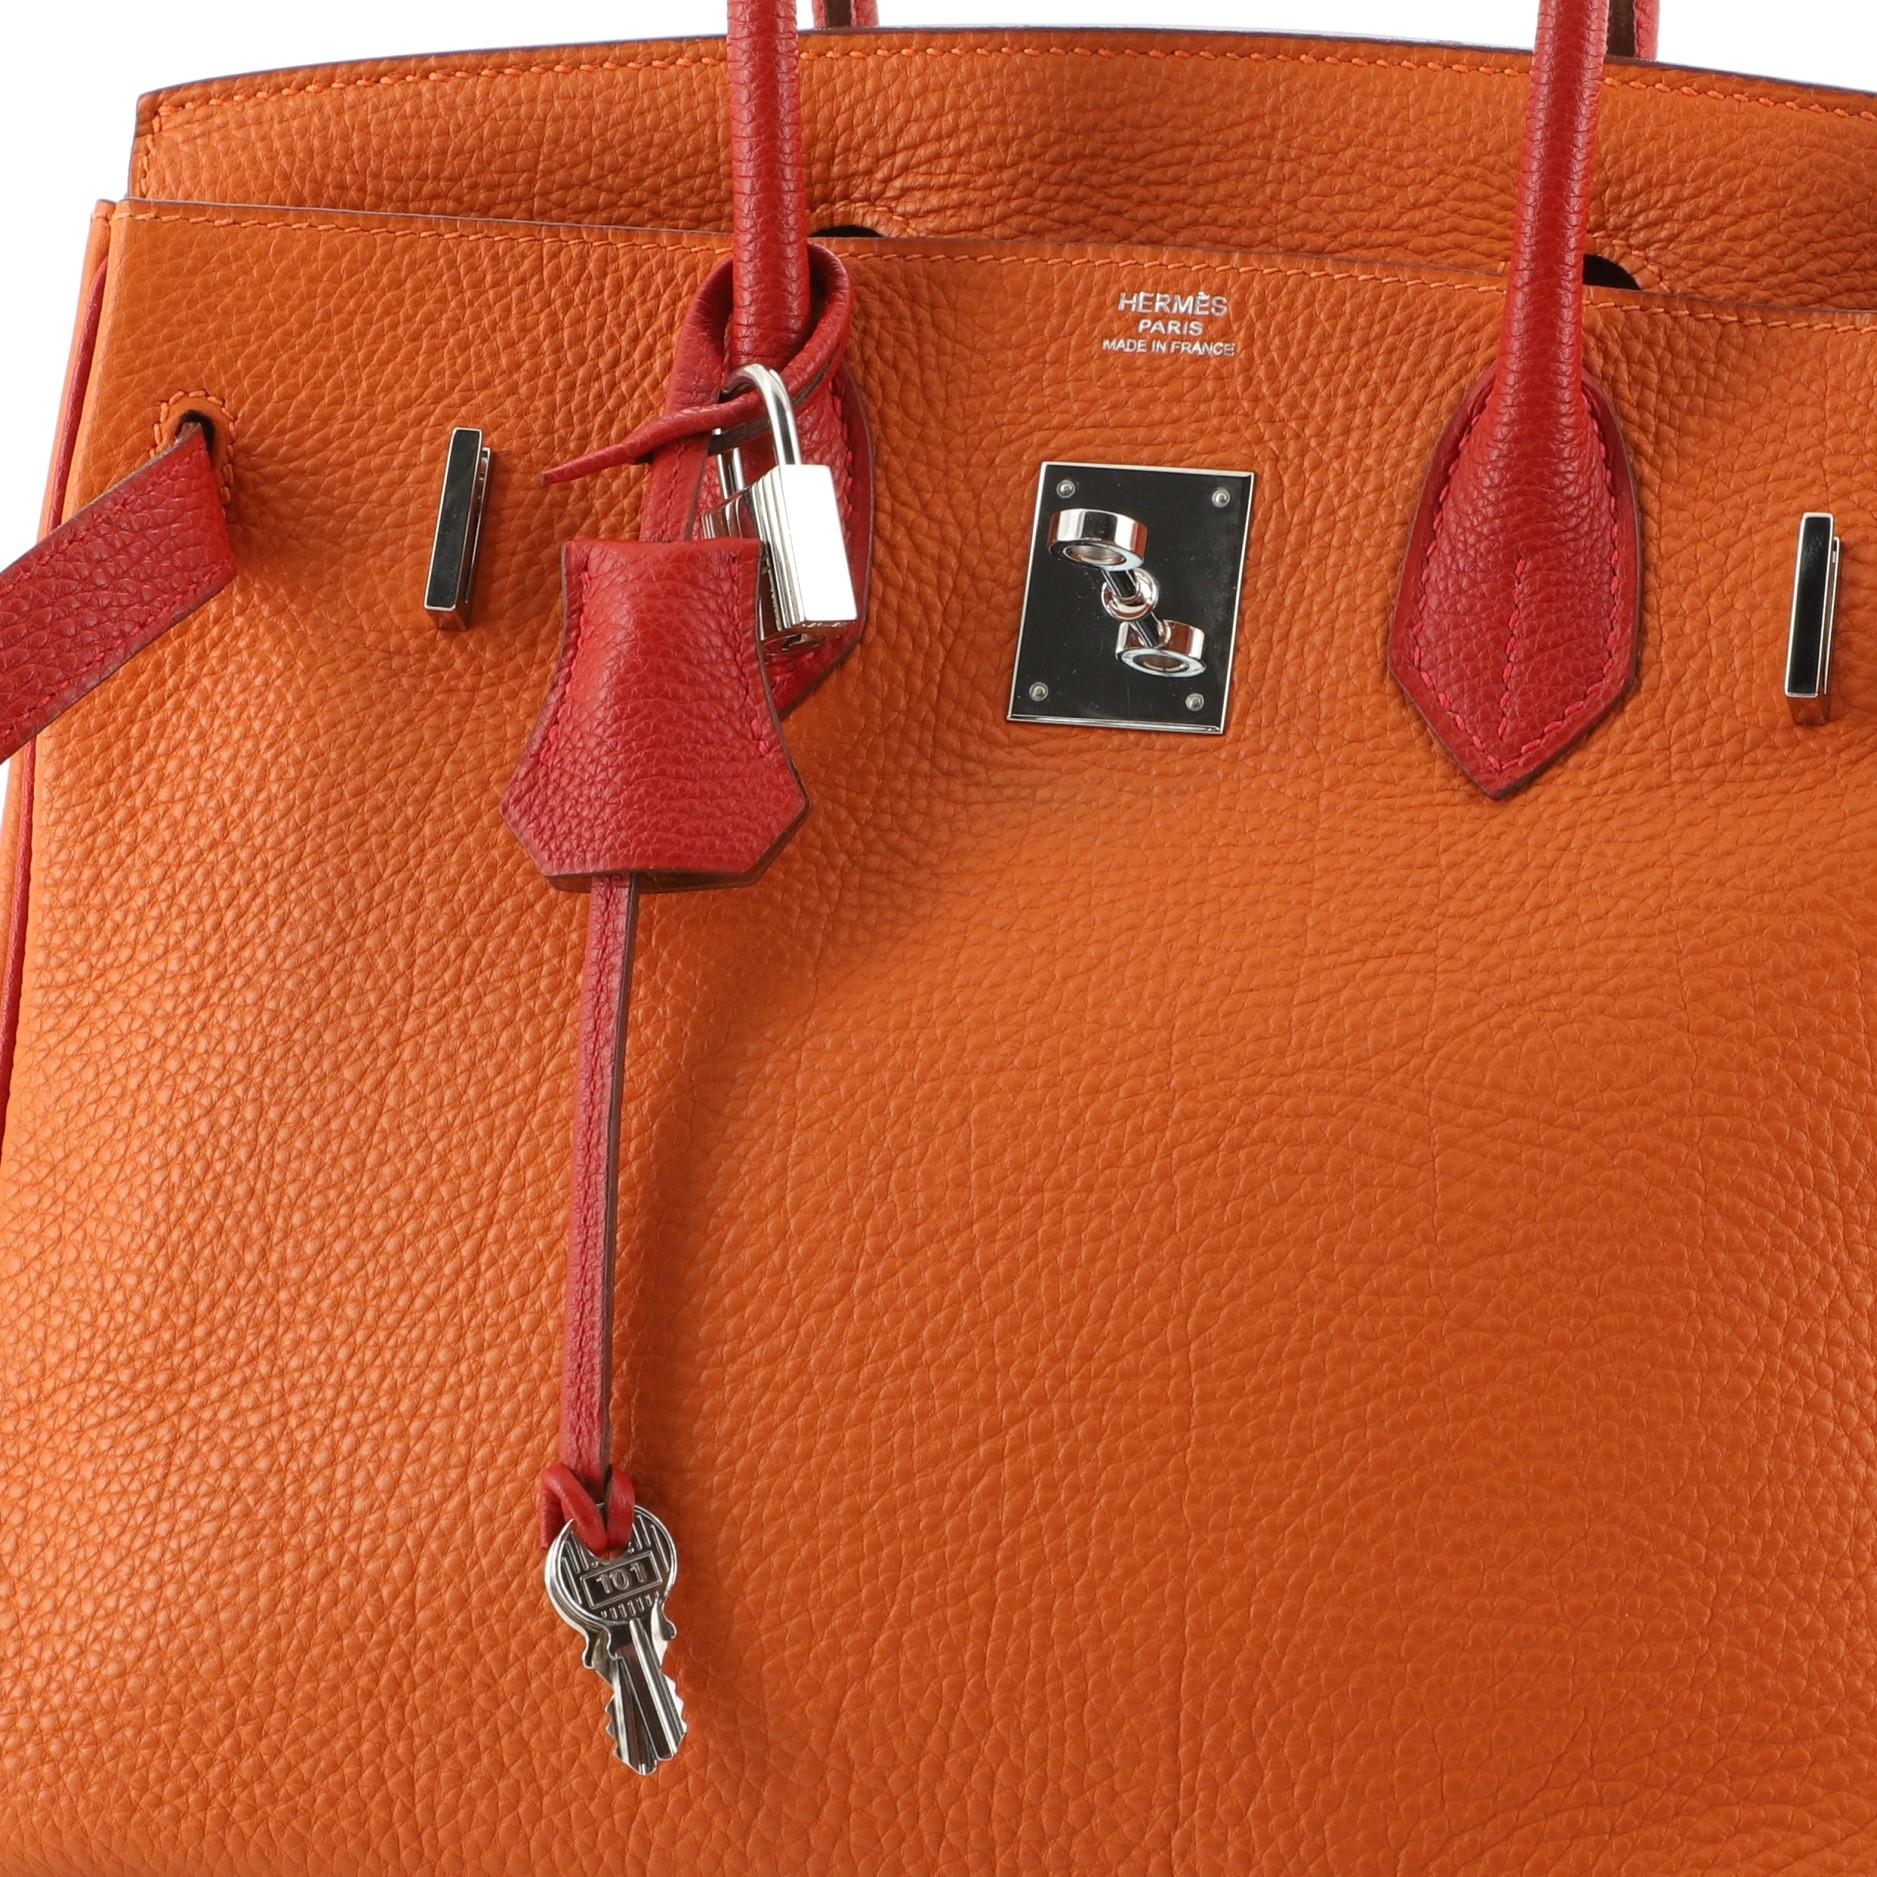 Hermes Birkin Handbag Bicolor Togo with Palladium Hardware 30 1